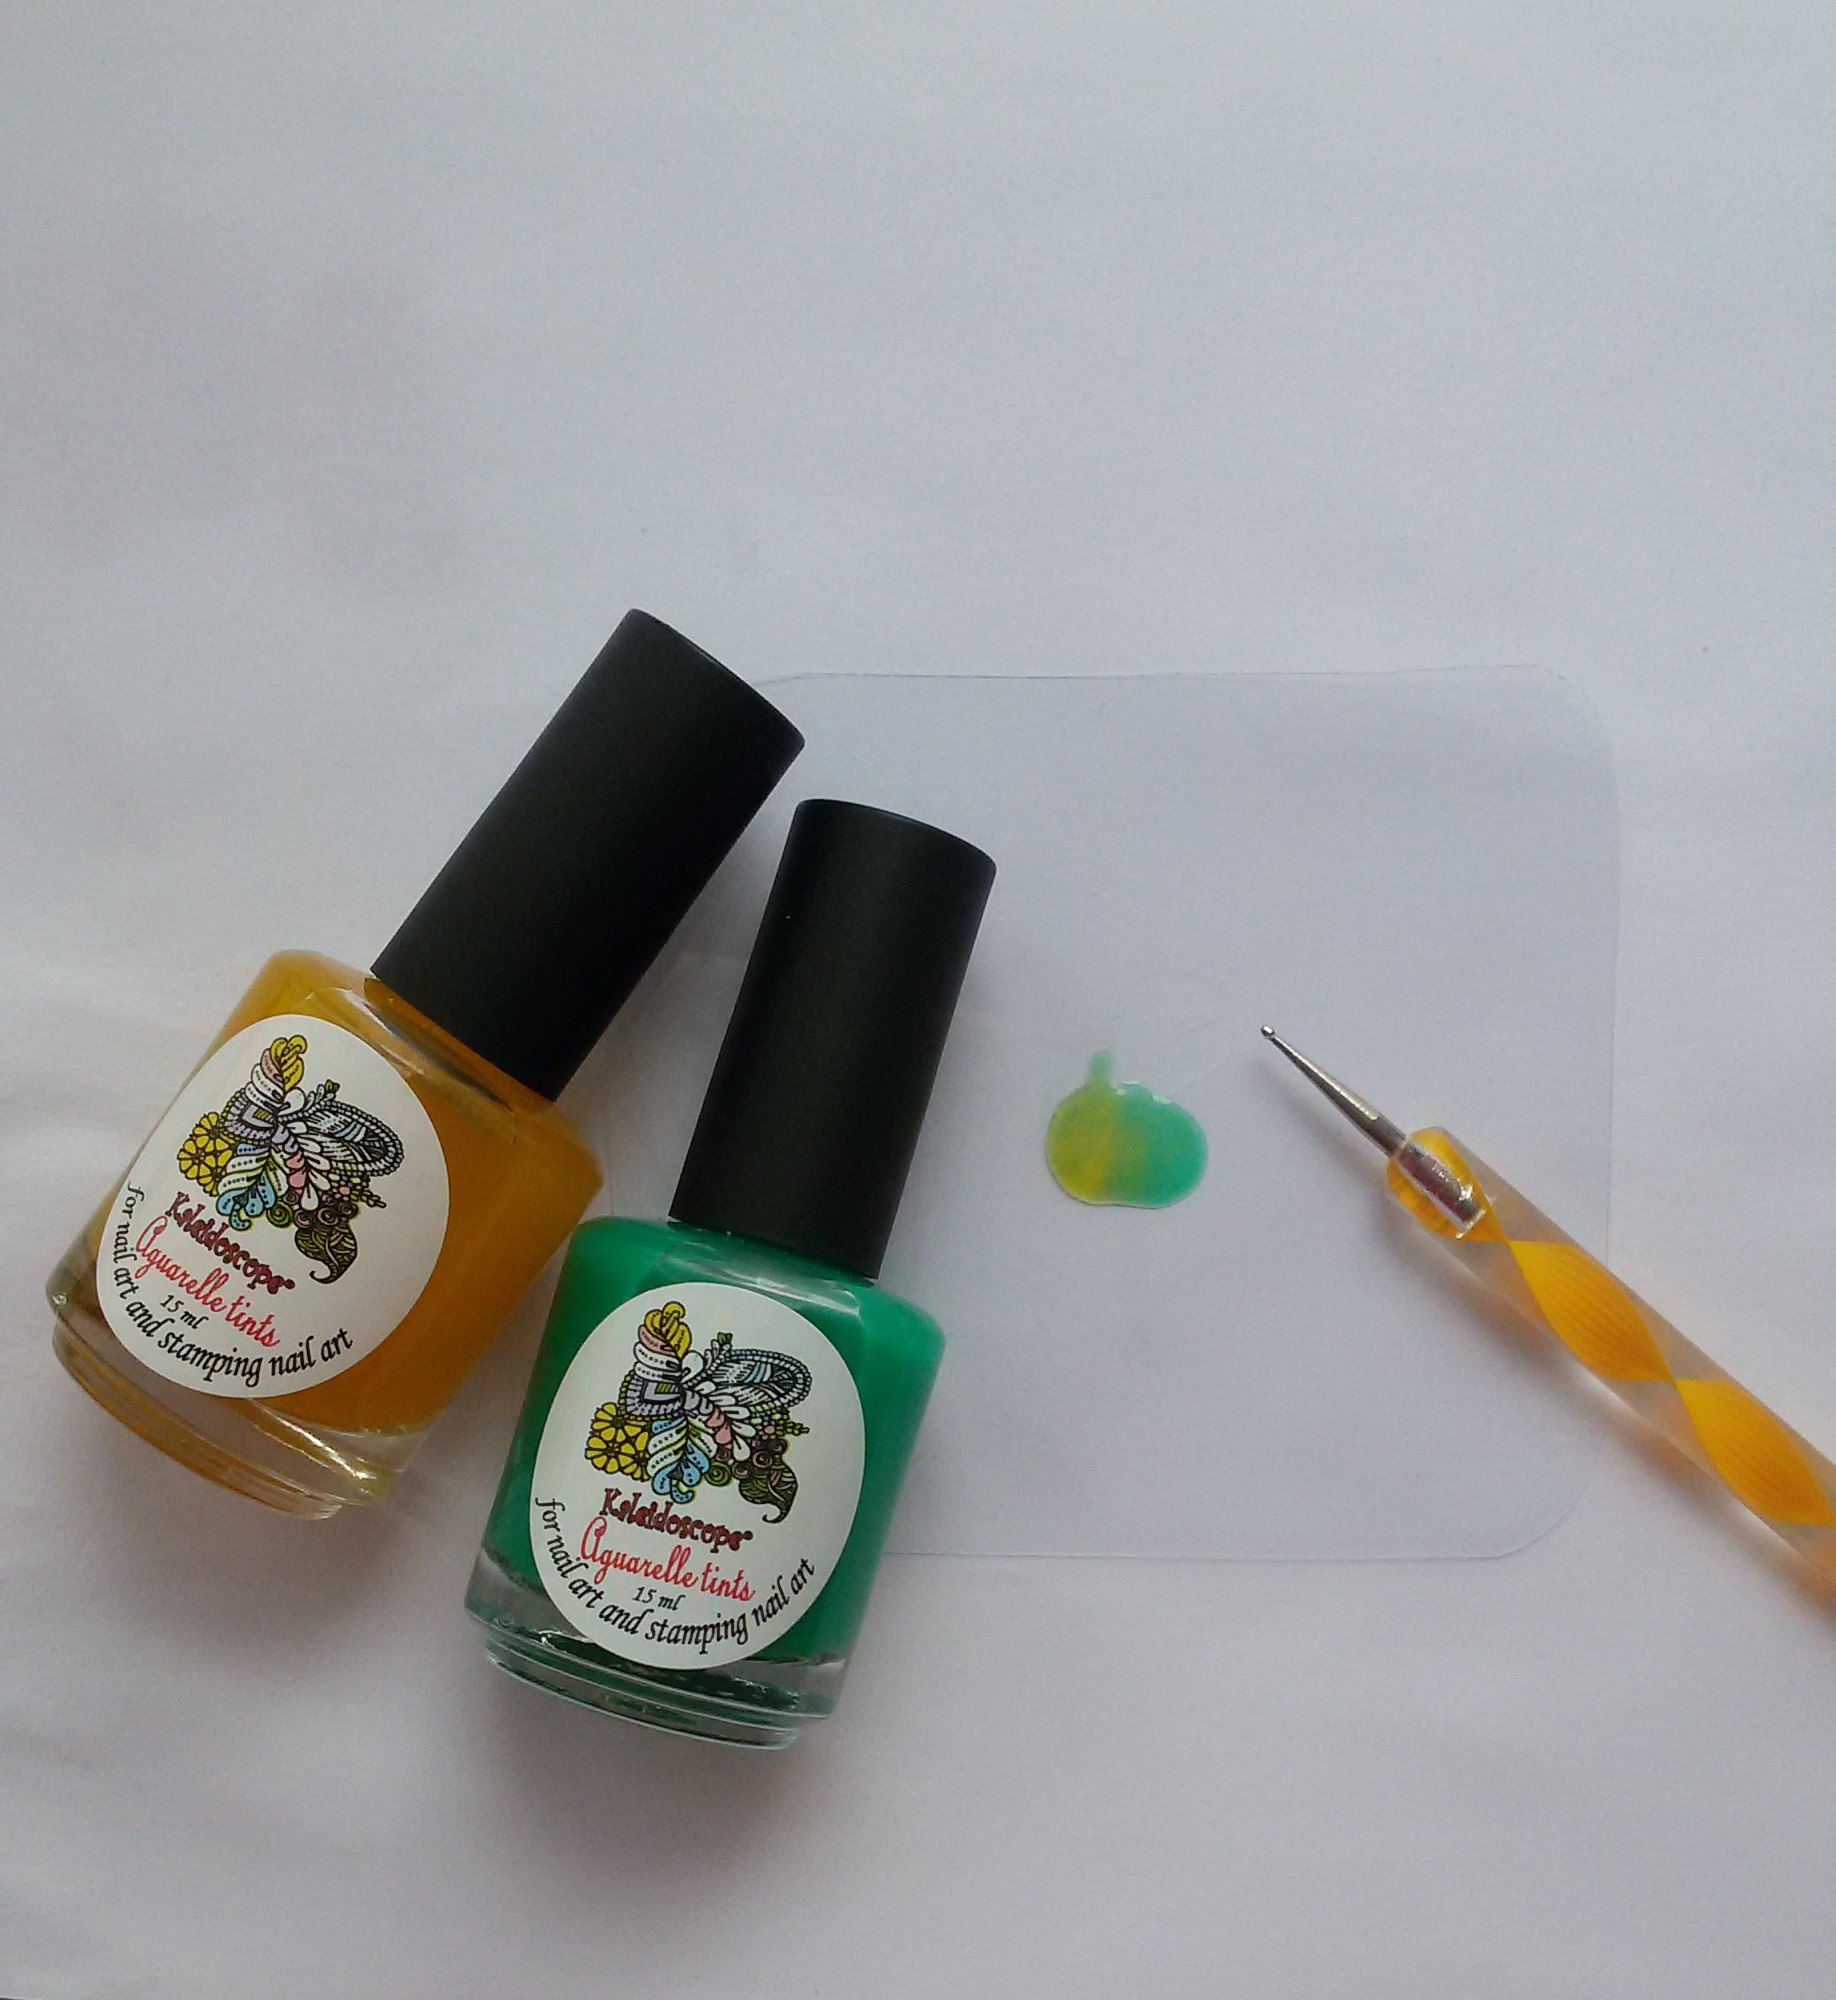 Акварельные тинты для ногтей Aquarelle tints for nail art and stamping nail art